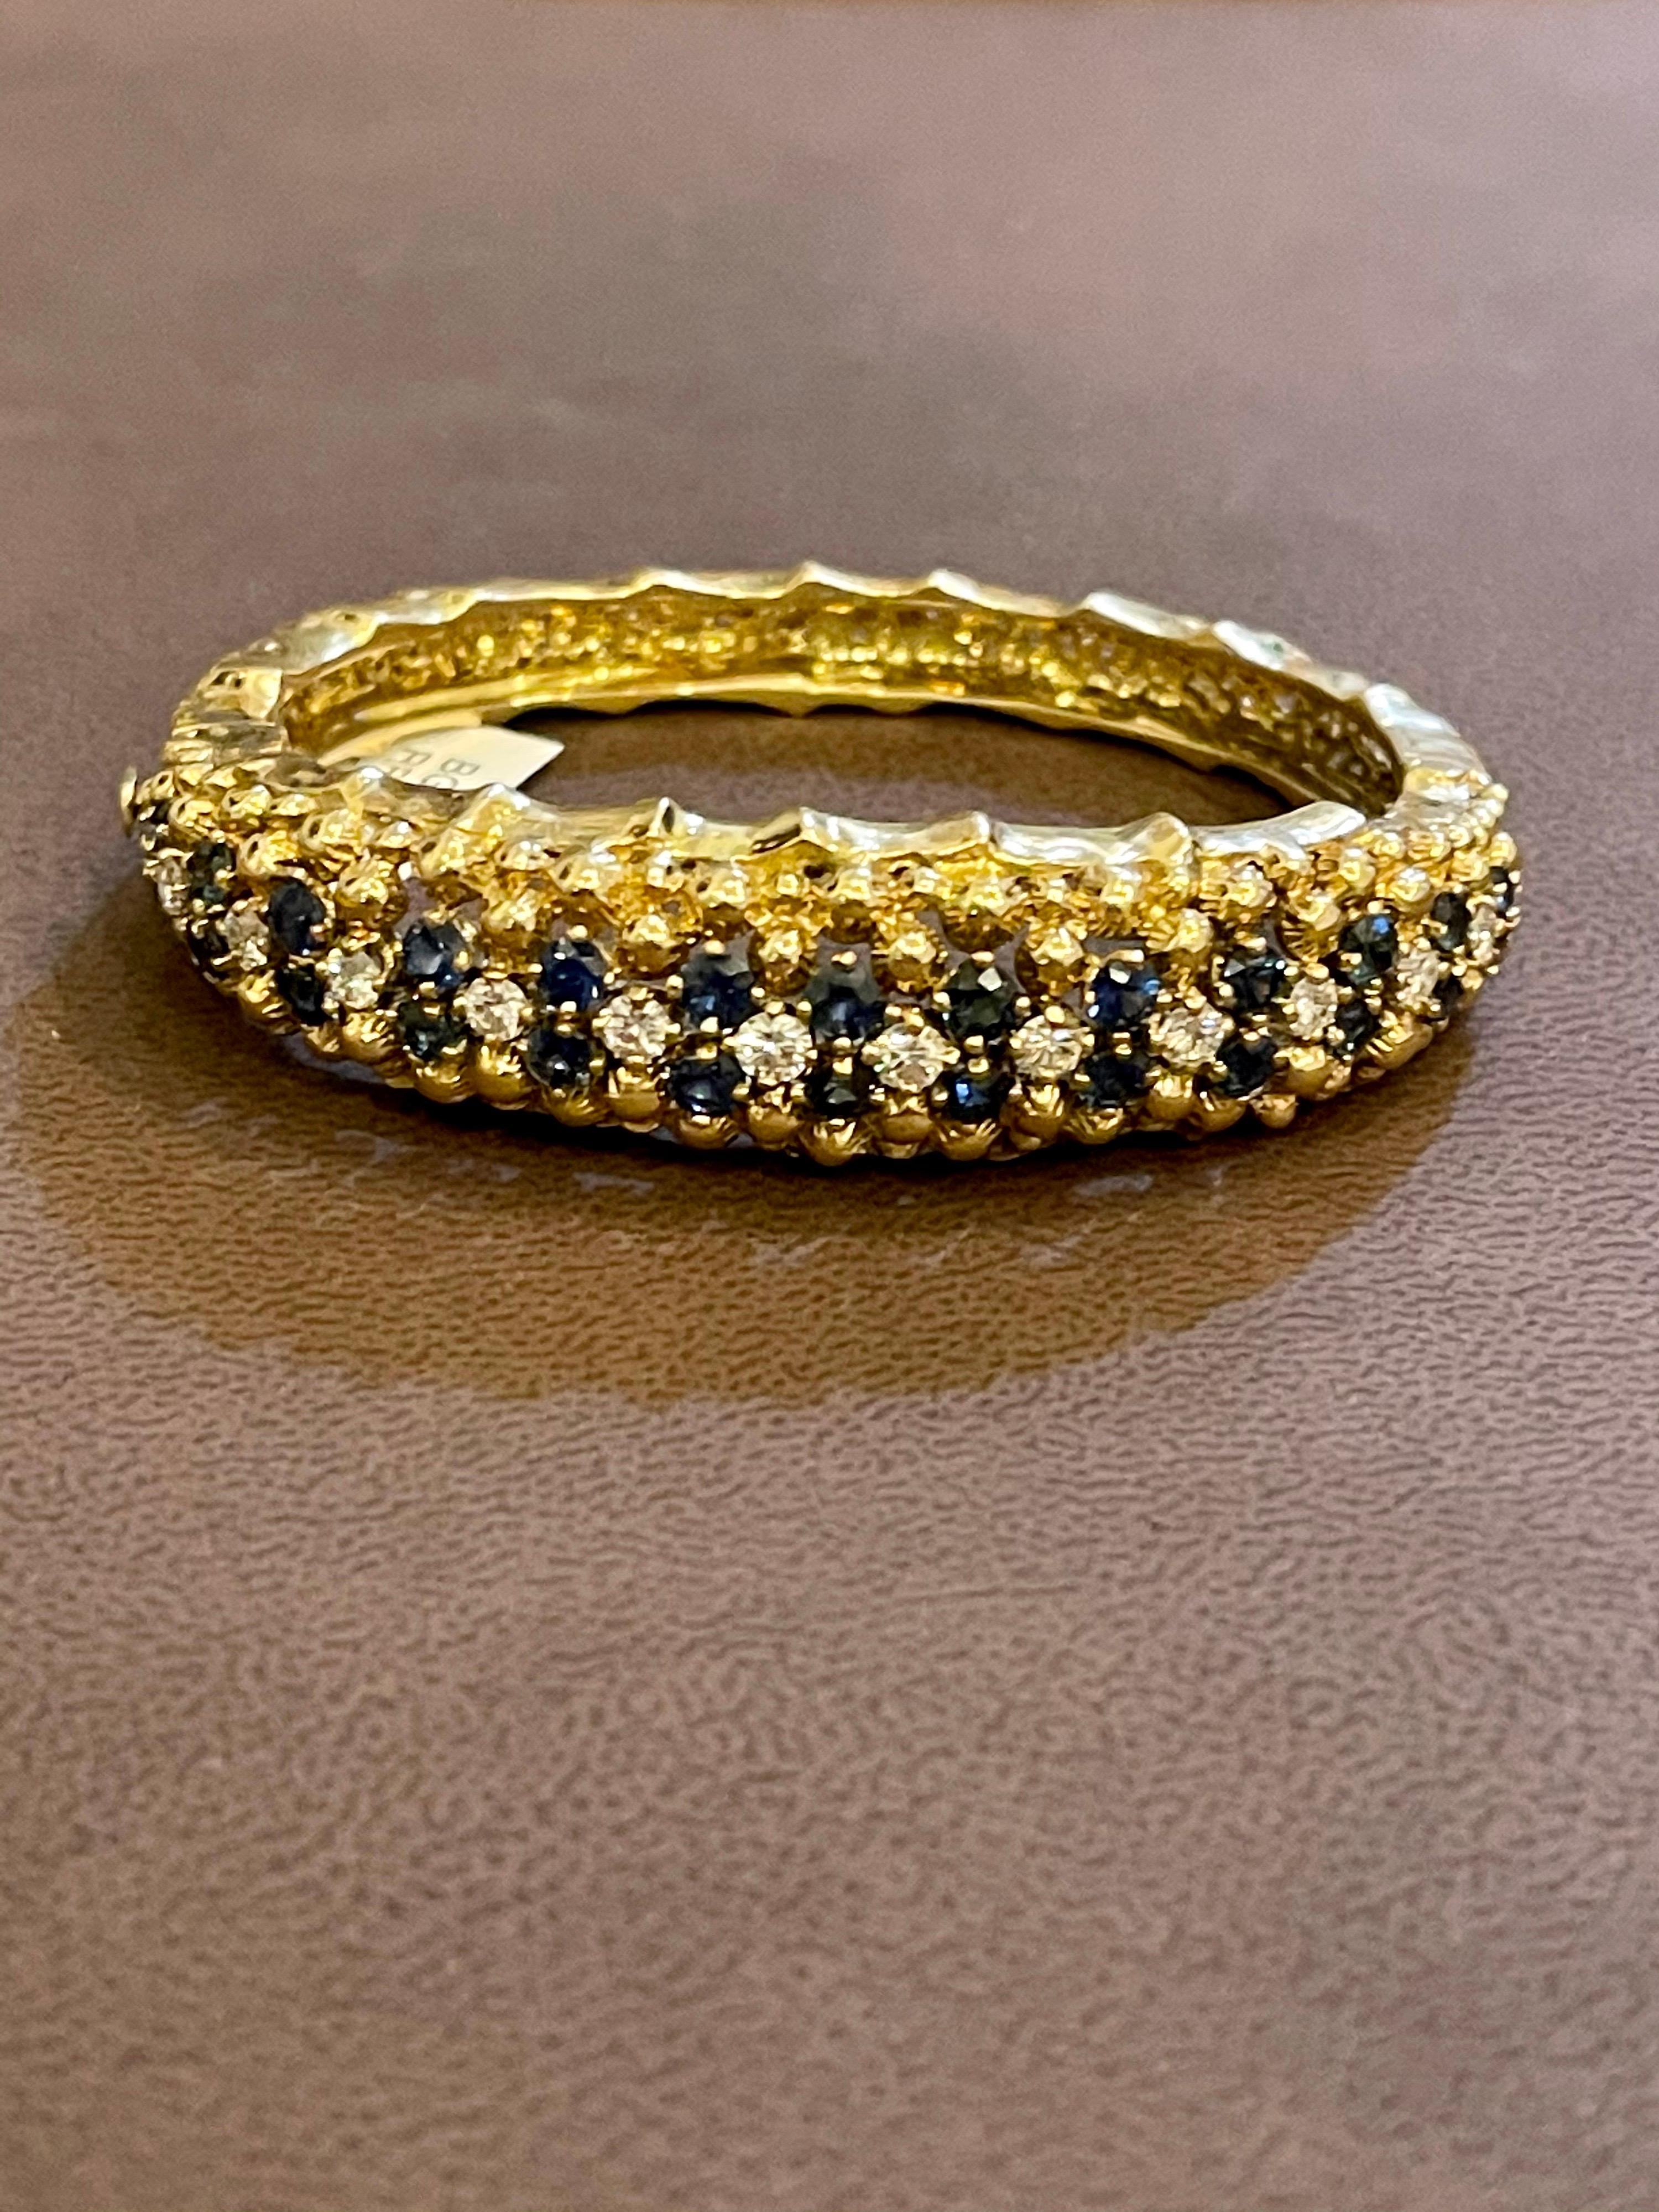 5 Carat Sapphire and 1.5 Carat Diamond Cuff Bangle Bracelet in 18 Karat Gold For Sale 2